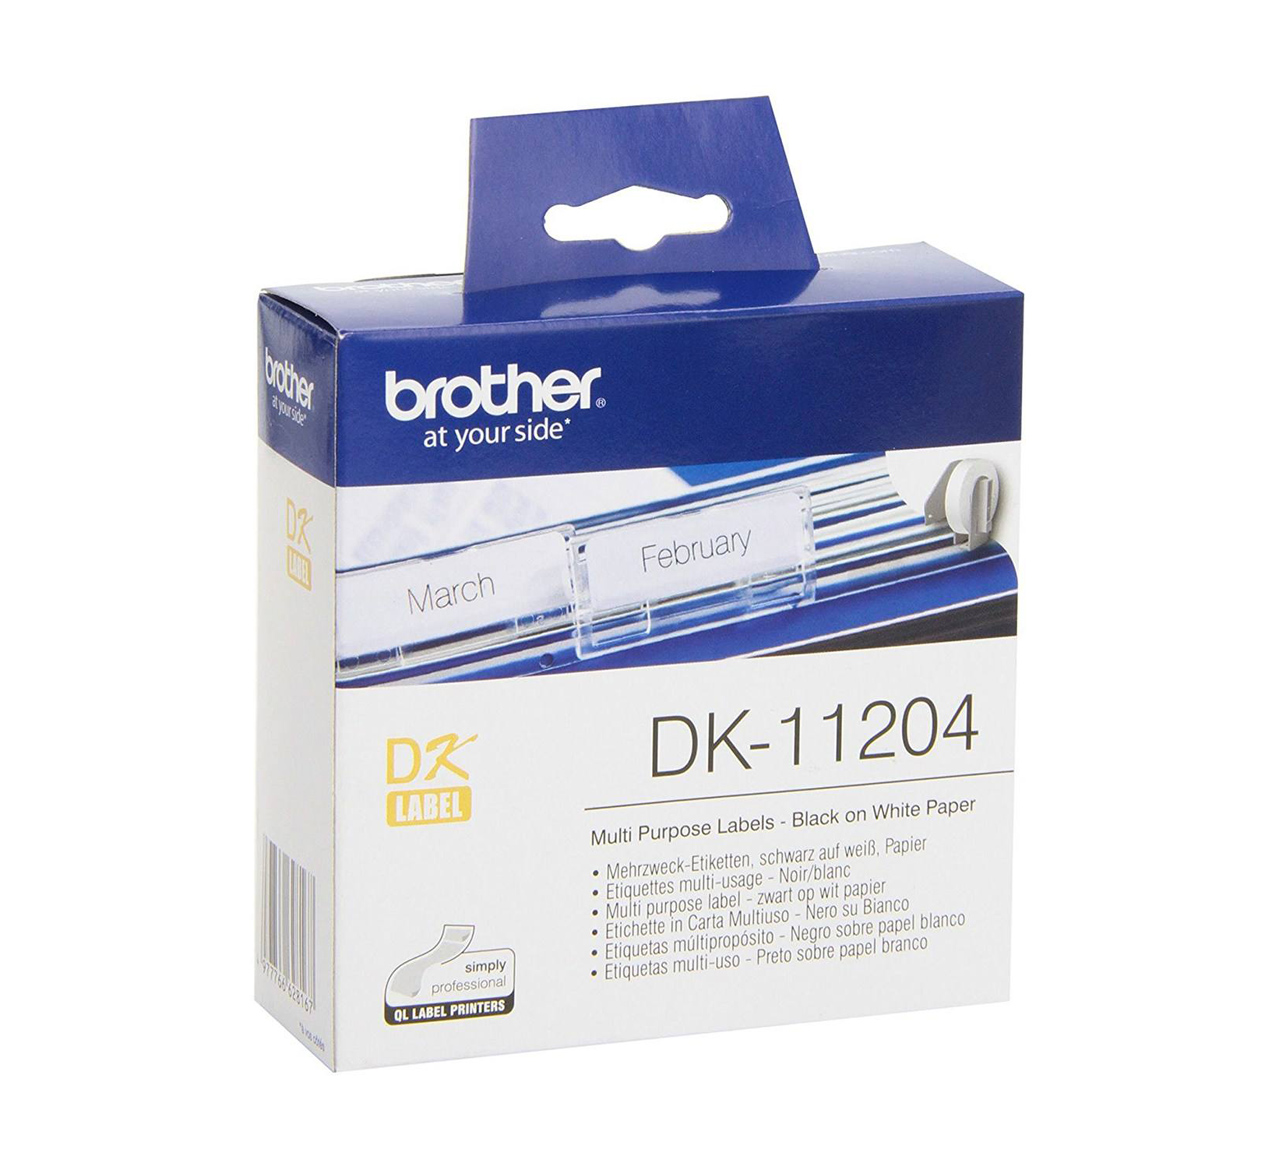  برچسب پرینتر لیبل زن برادر مدل DK-11204 ا Brother DK-11204 Label Printer Label